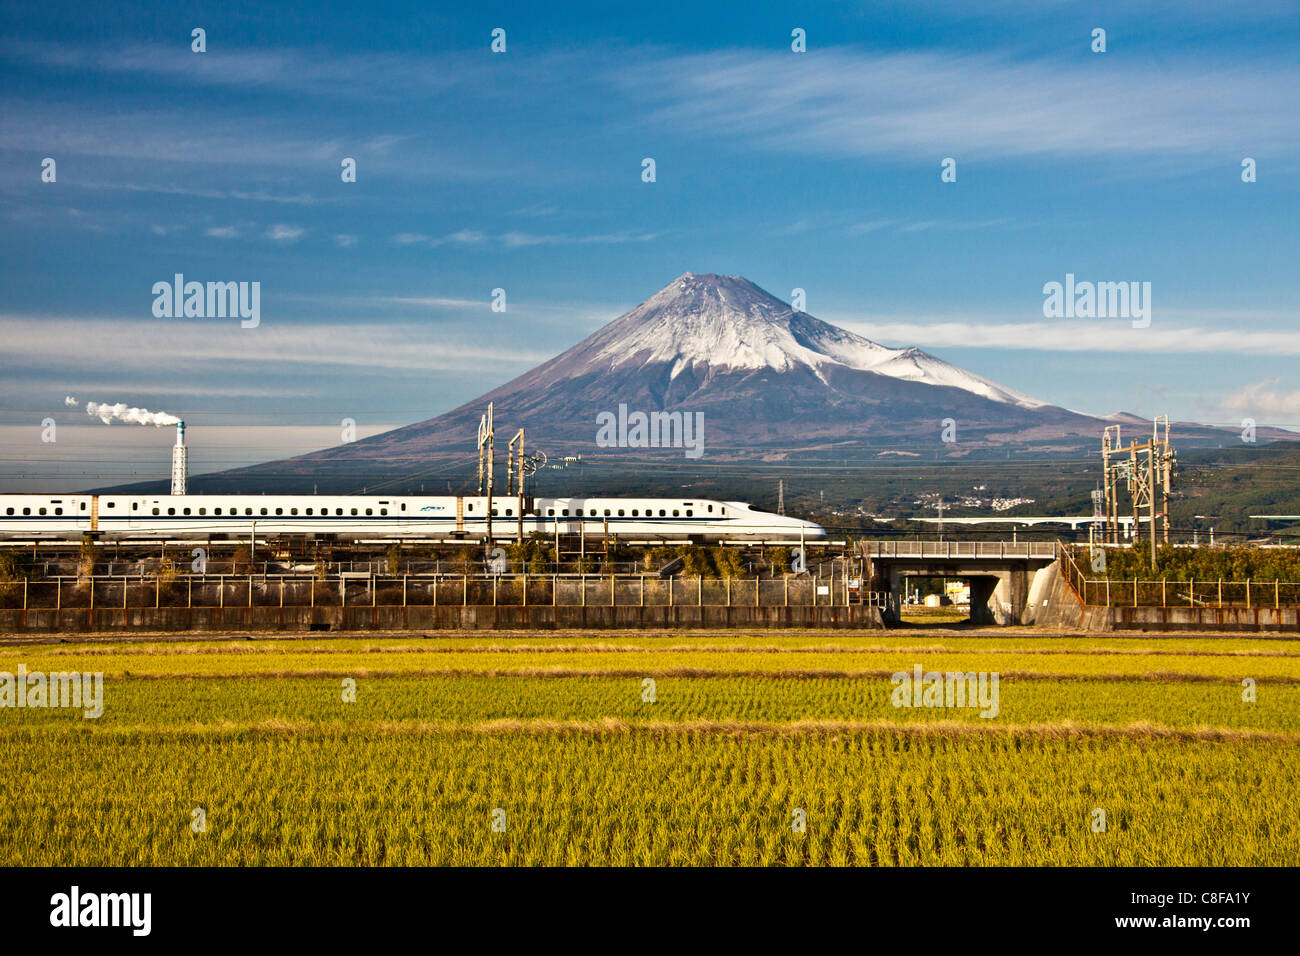 Japan, November, Asia, Fuji, city, mountain Fuji, high-speed train, Shinkansen, scenery, agriculture, rice field, growing of ric Stock Photo